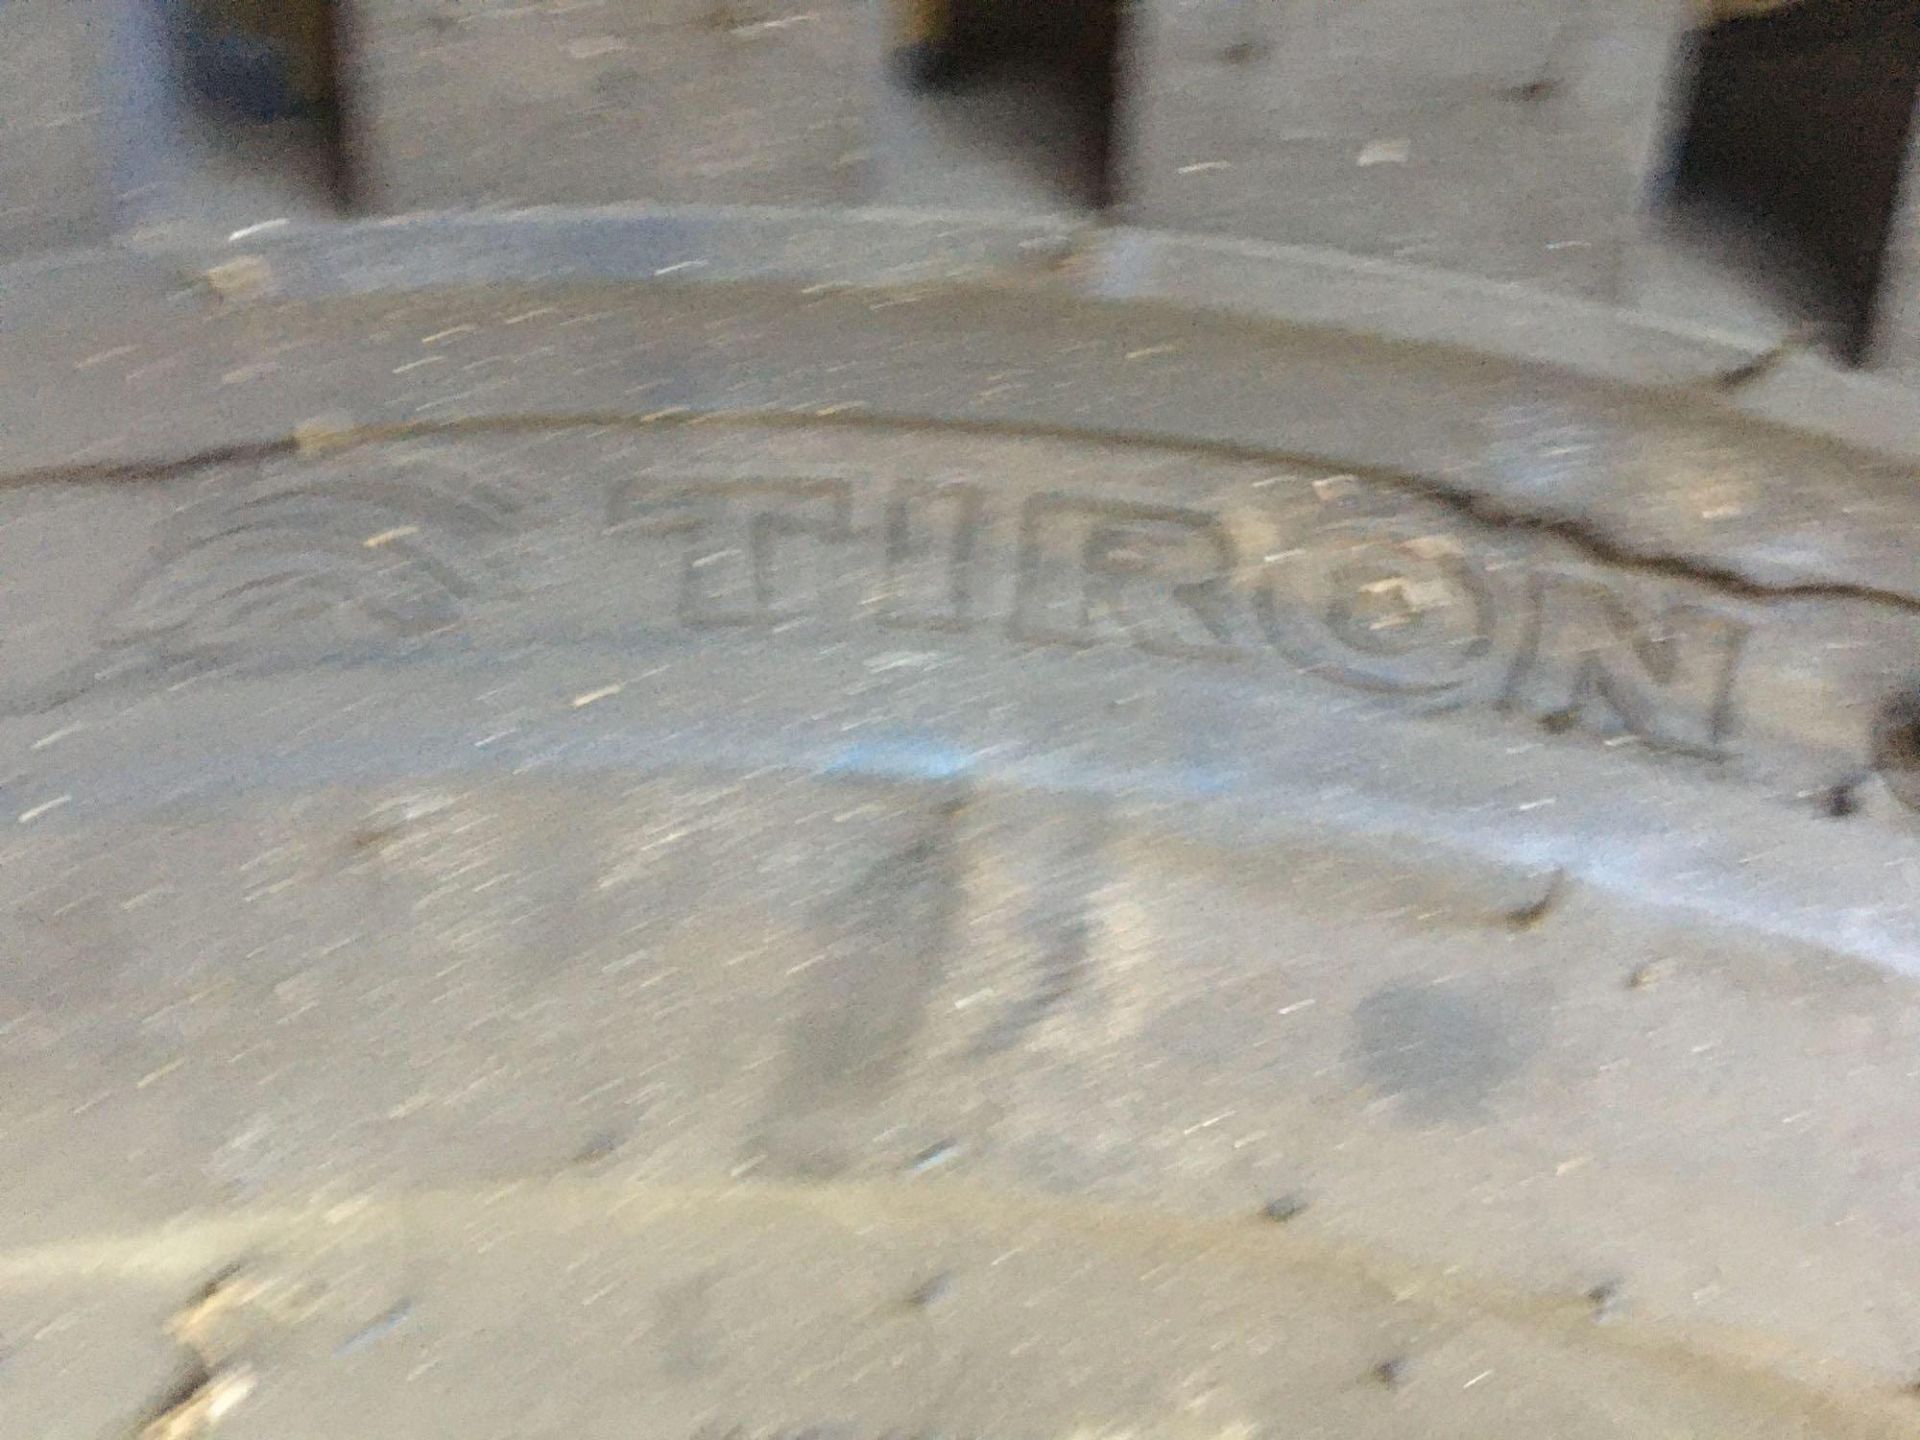 2 Tiron Tires - Image 2 of 3